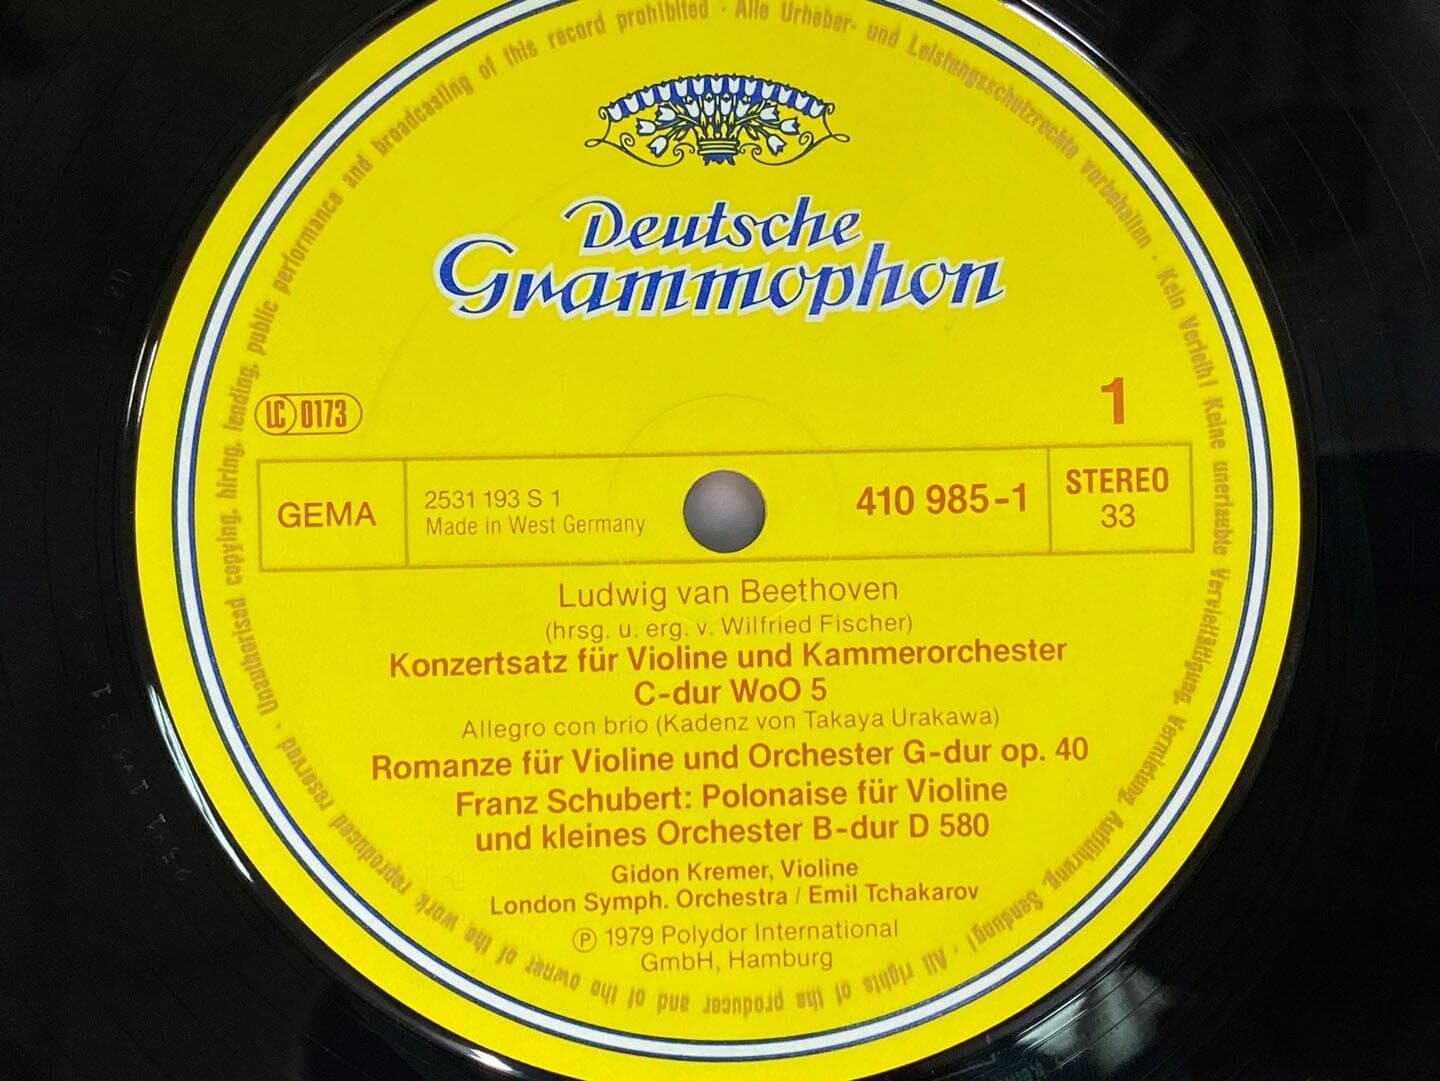 [LP] 기돈 크레머 - Gidon Kremer - Beethoven,Schubert Musik Fur Violine & Orchester LP [독일반]